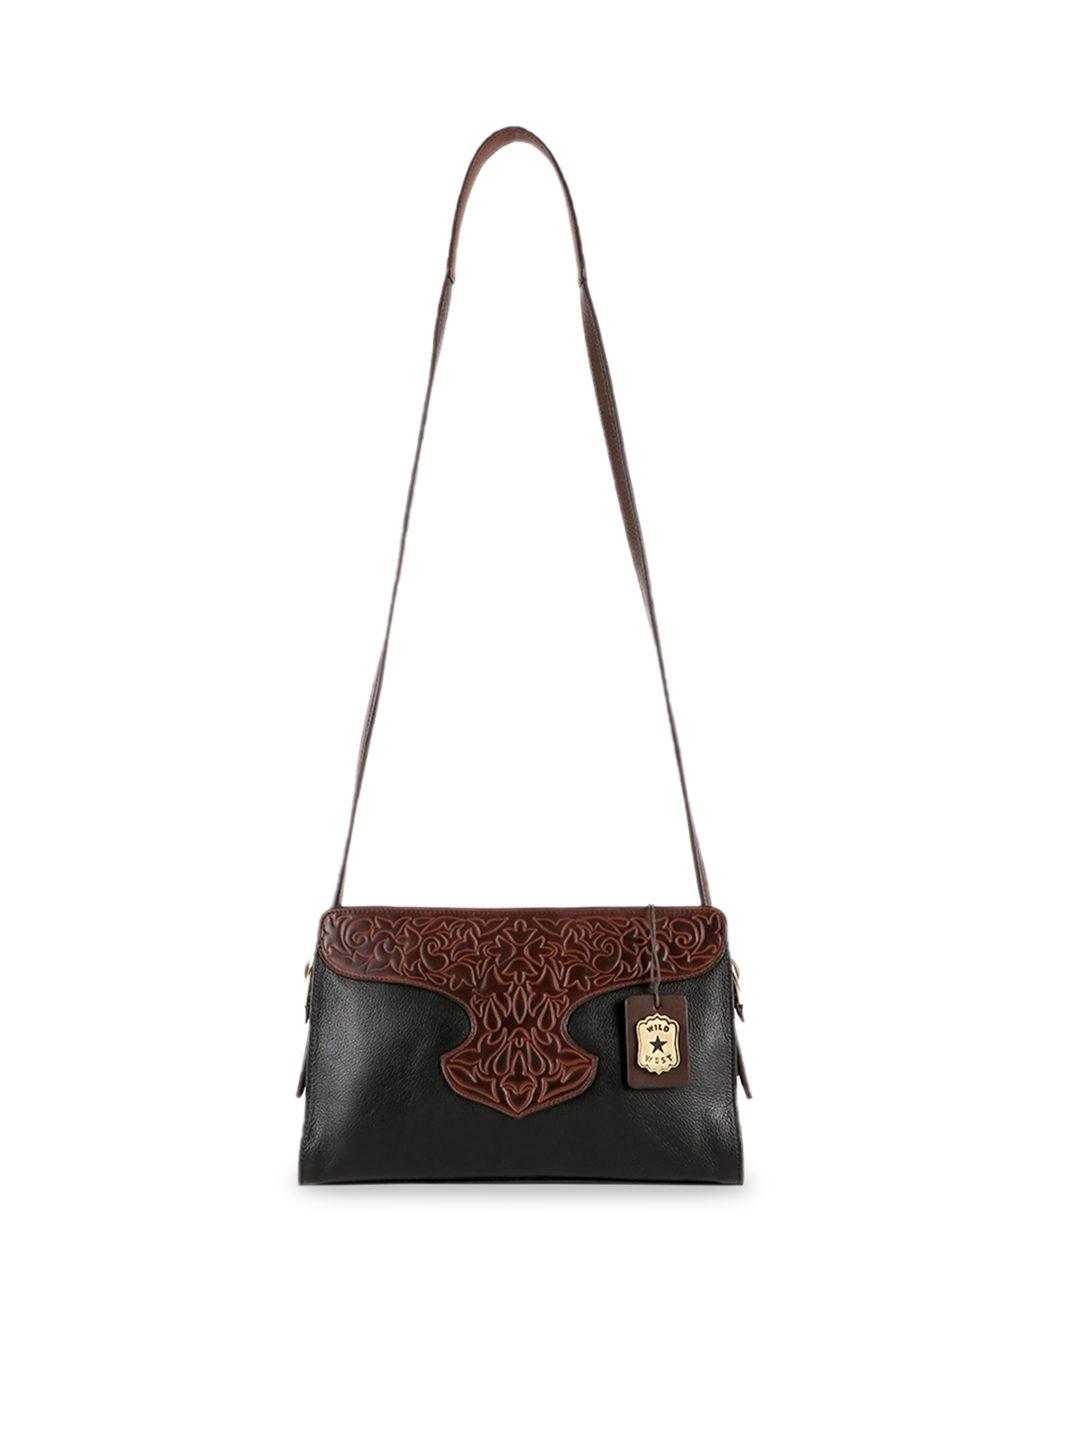 hidesign black & brown textured leather sling bag